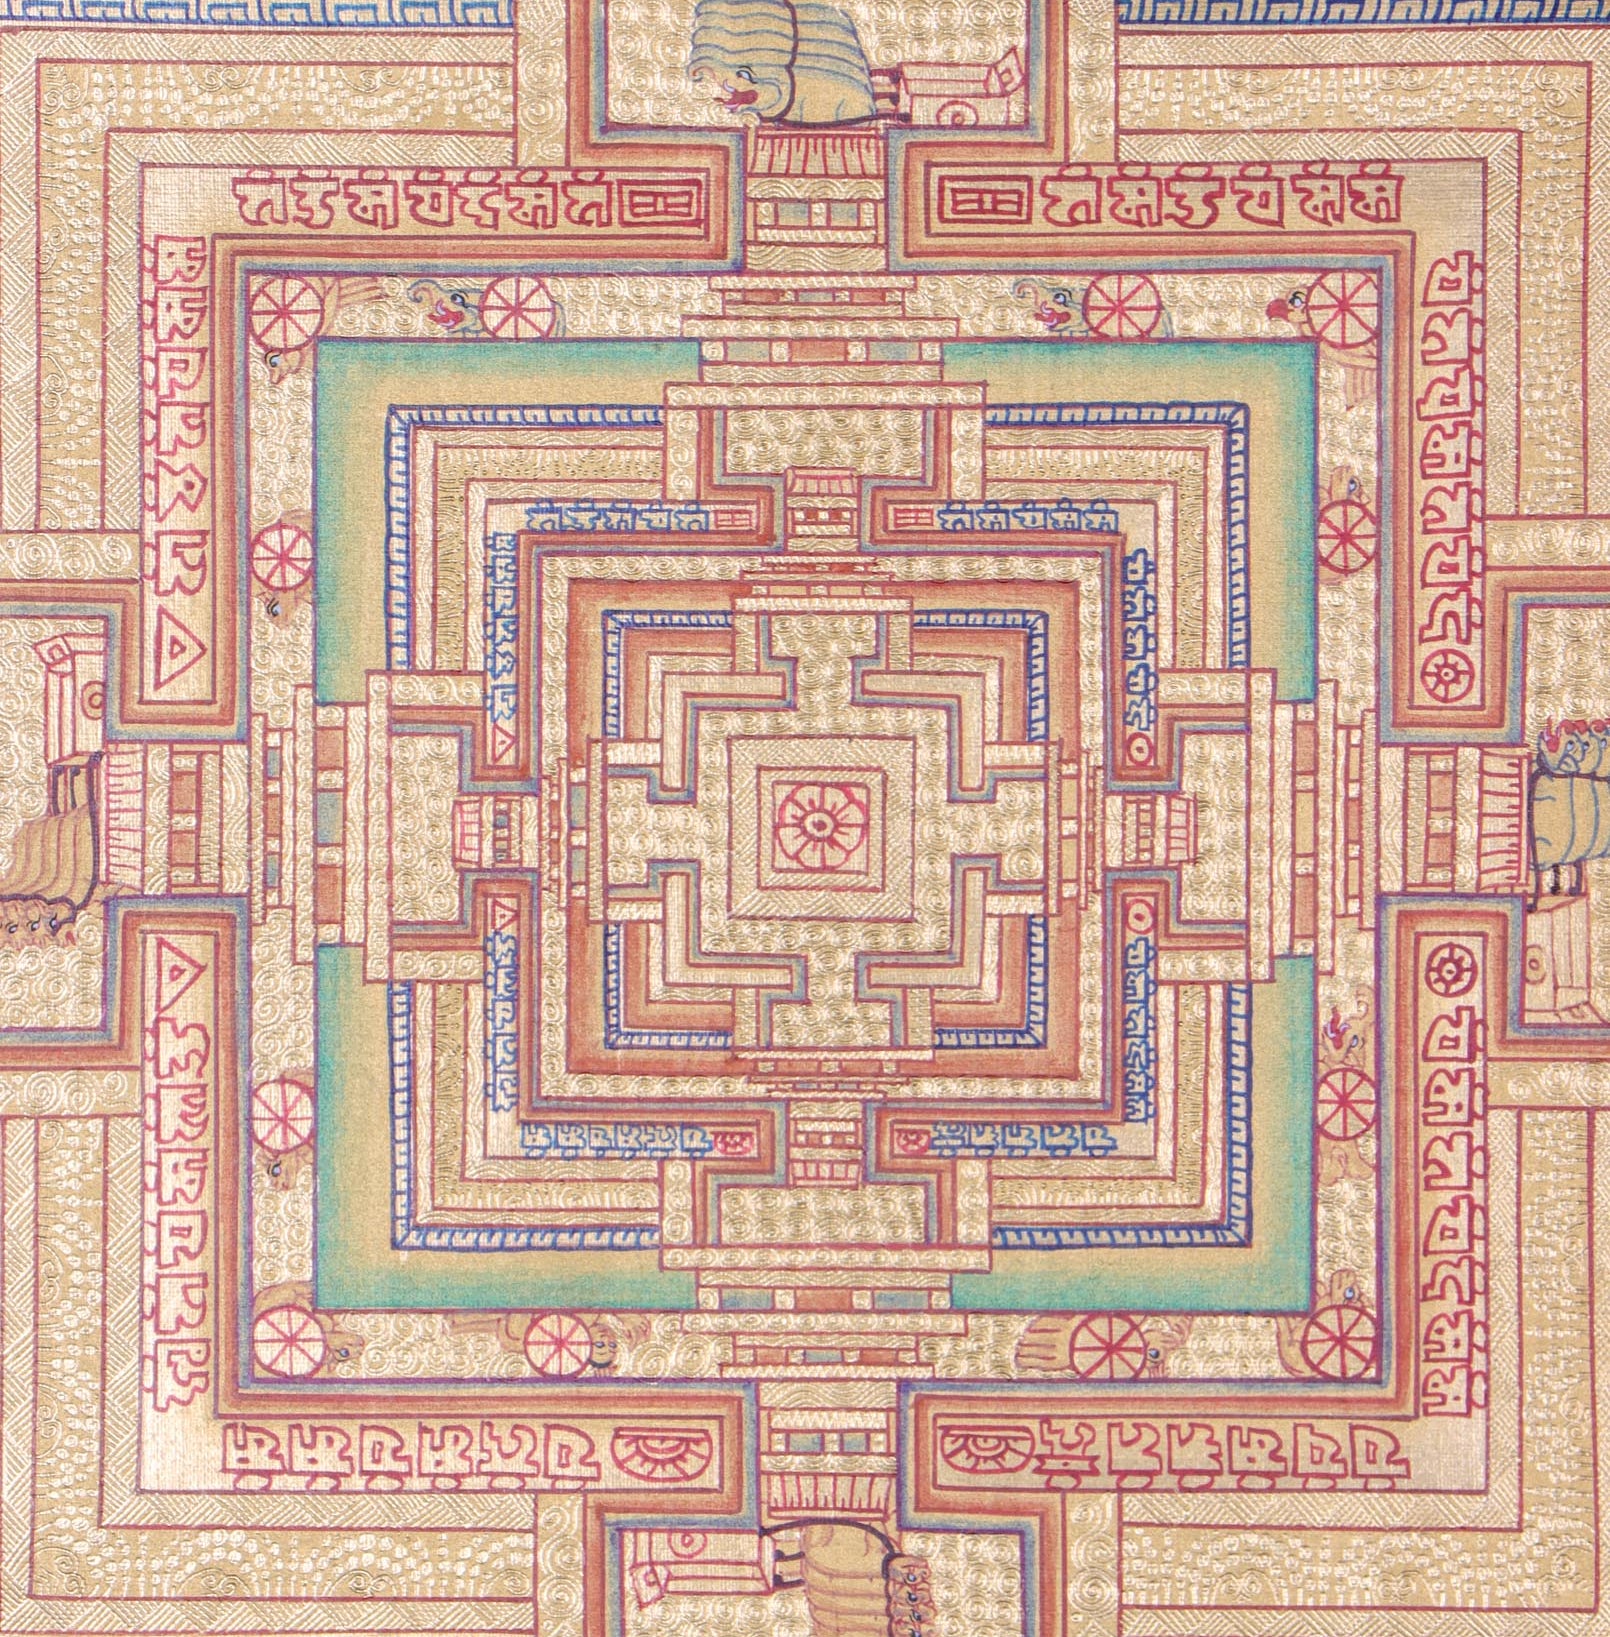 Kalachakra Mantra Mandala made by the skilled artisans .